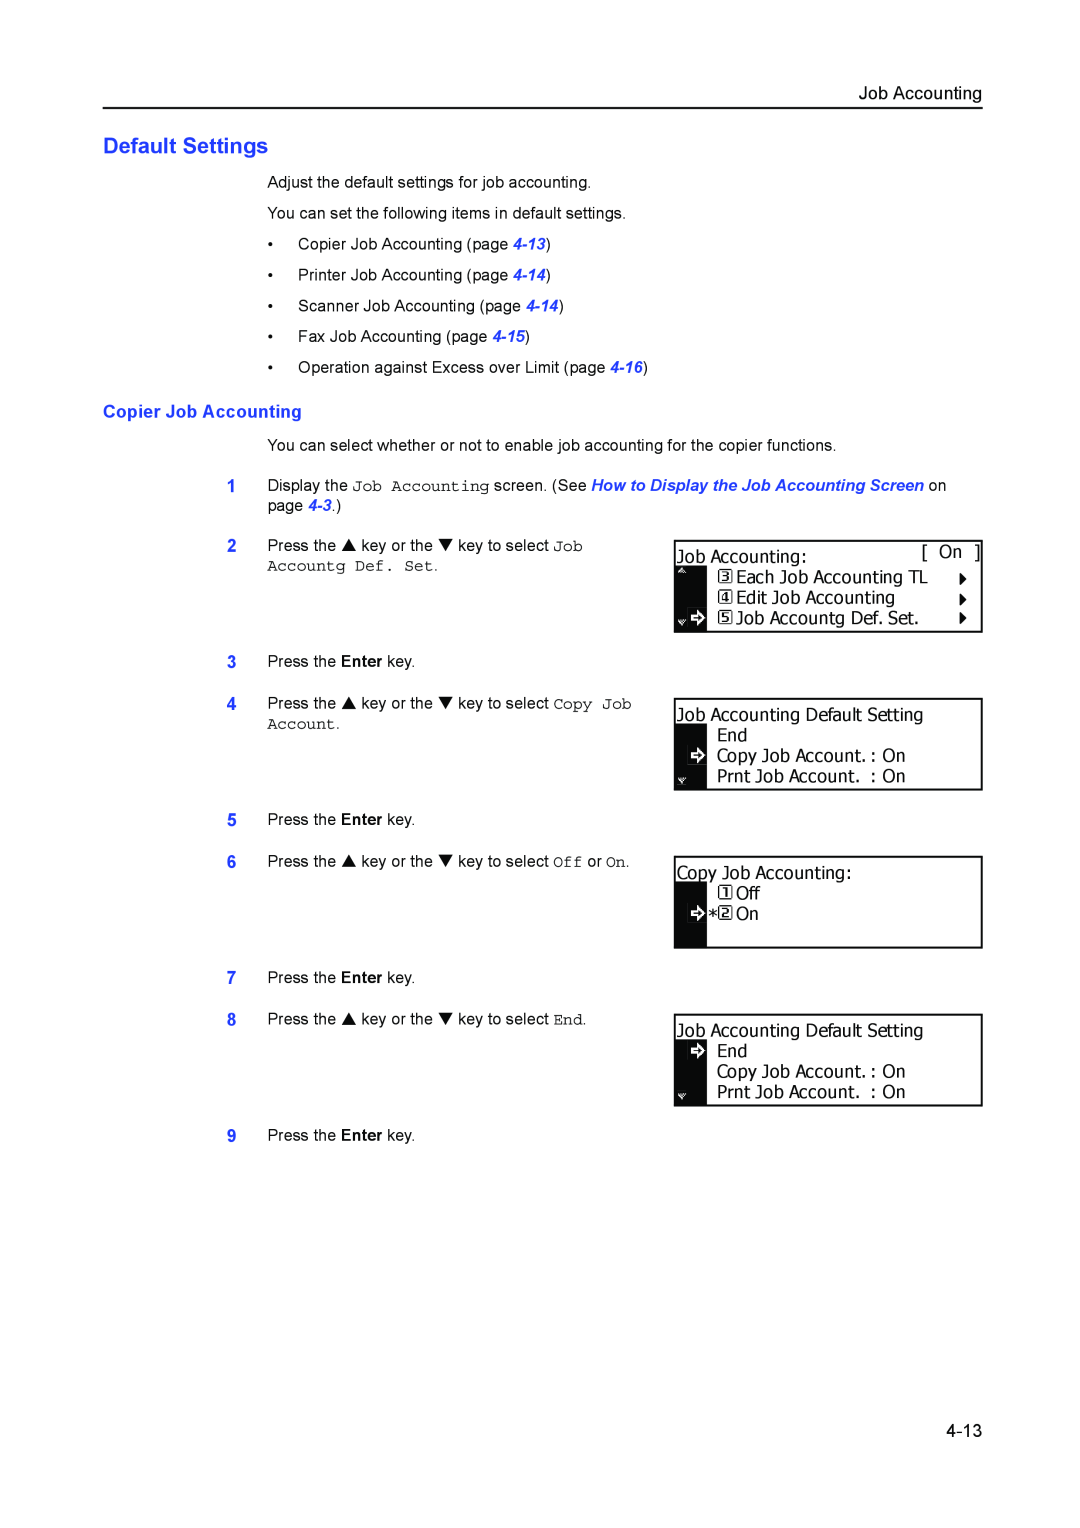 Kyocera 2550, 2050, 1650 manual Default Settings, Copier Job Accounting, 4-13 